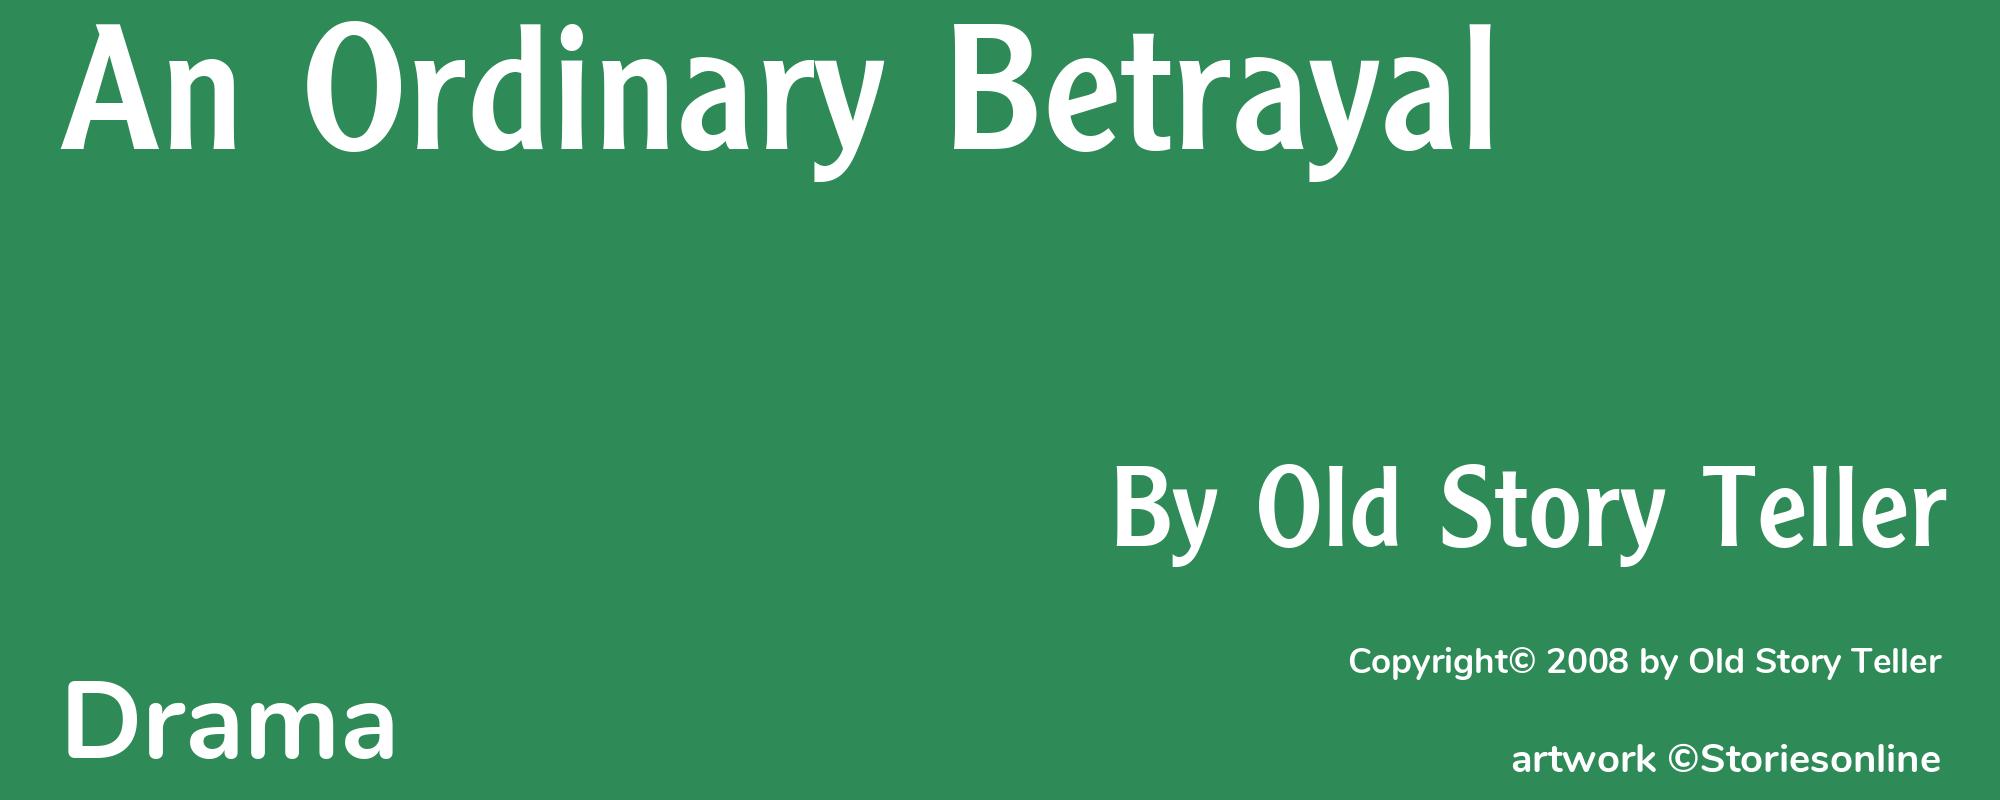 An Ordinary Betrayal - Cover